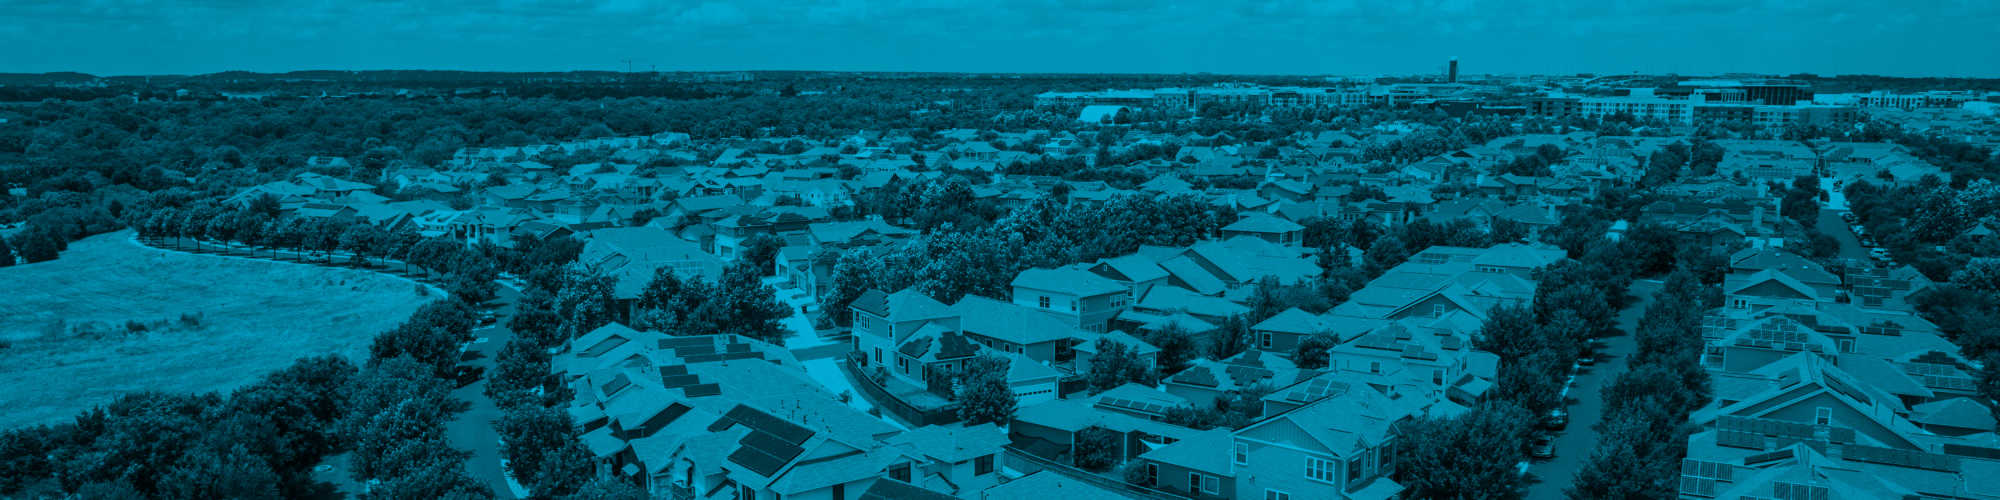 Suburban community blue